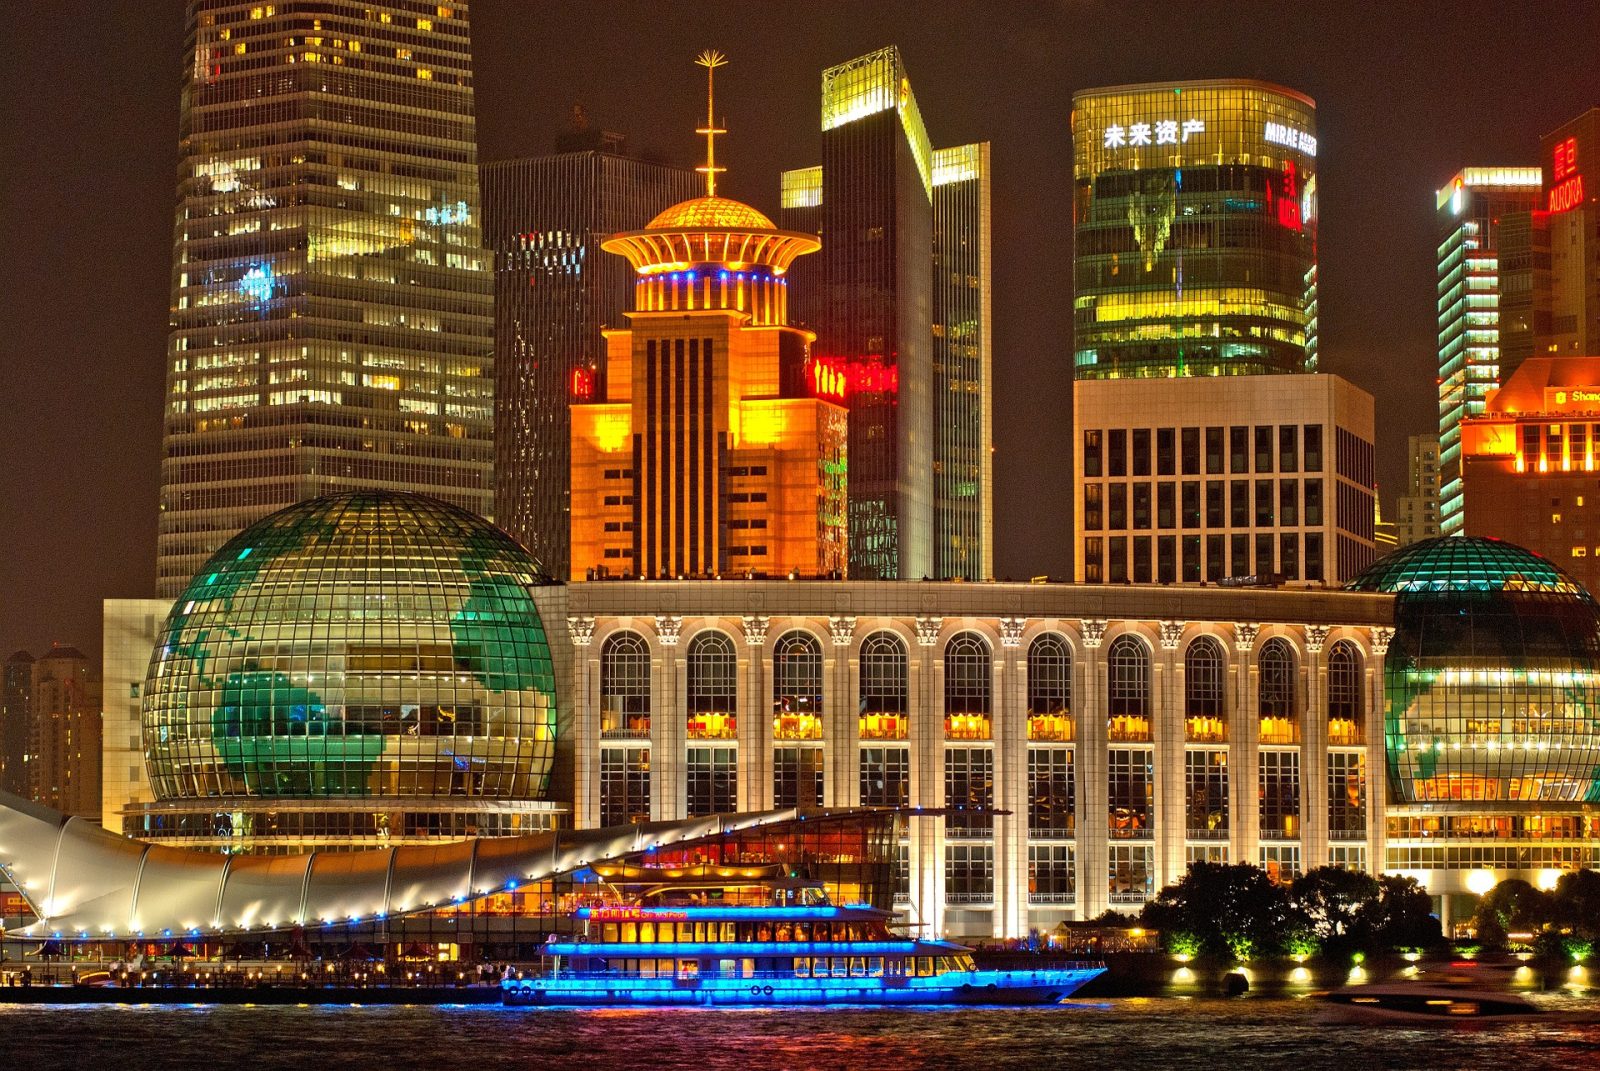 Shanghai to test NFT trading platform